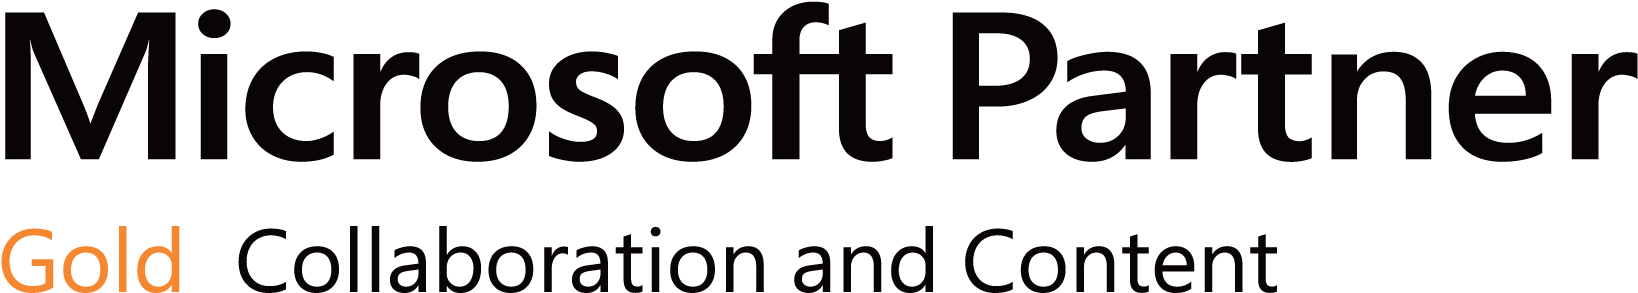 Office 365 Logo Transparent - Microsoft Partner Gold Application Development (1825x513)